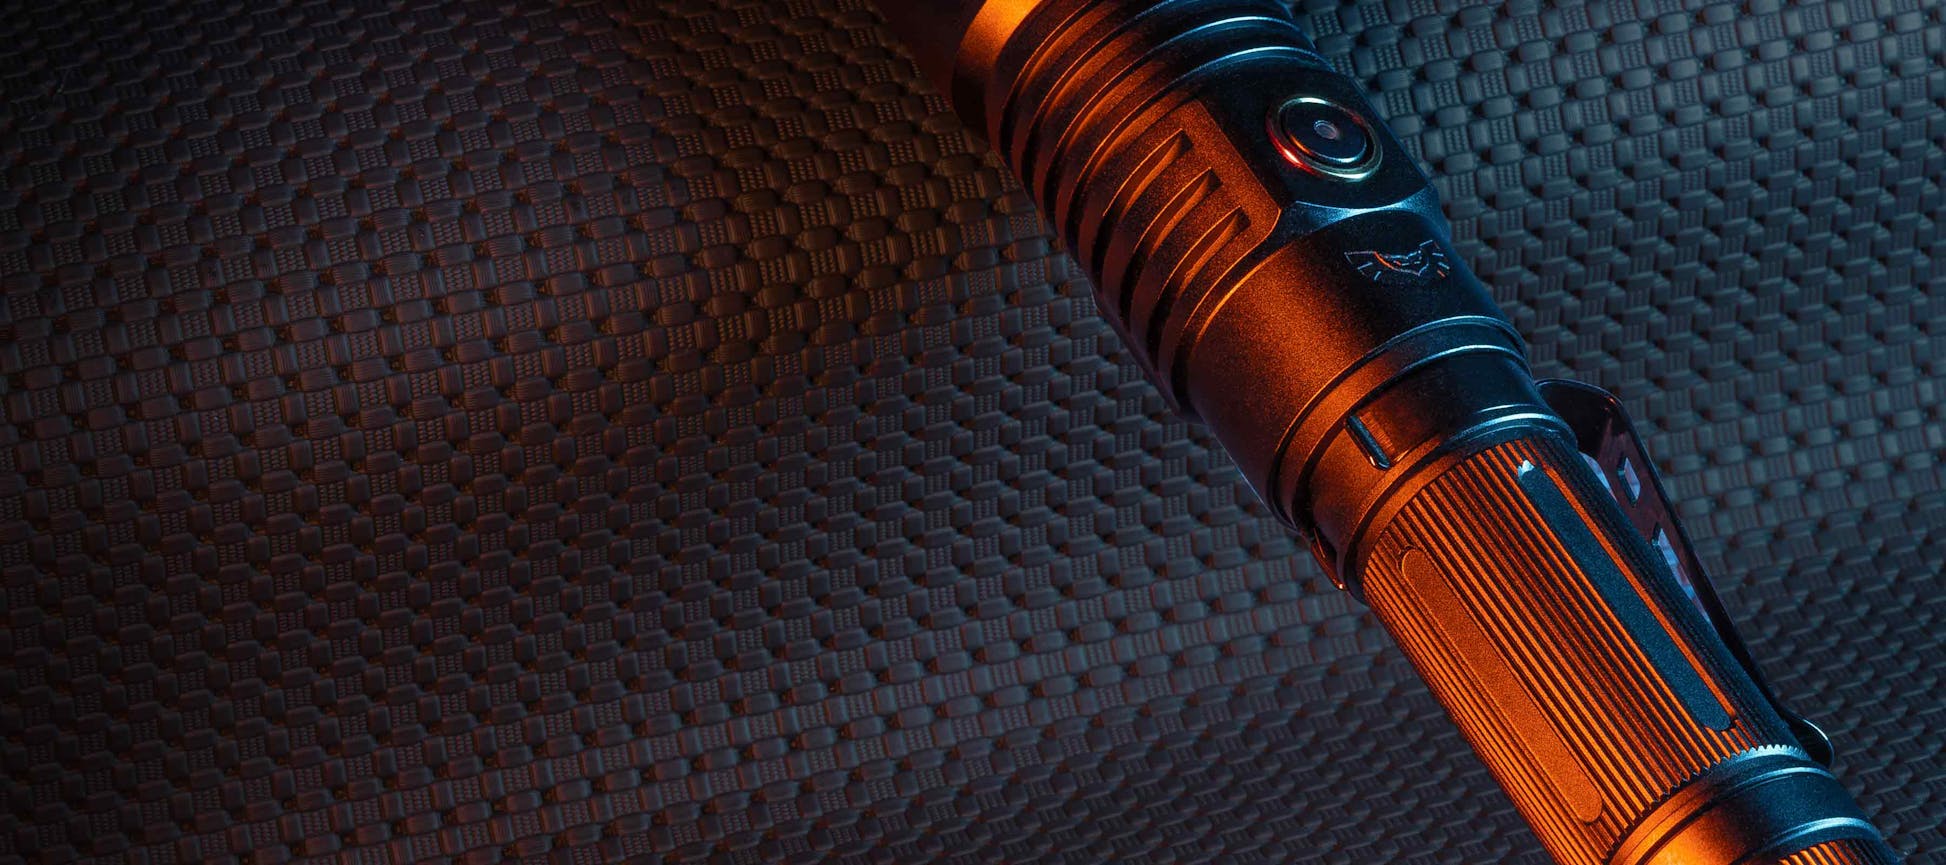 STEDI FZ460 Laser LED Torch